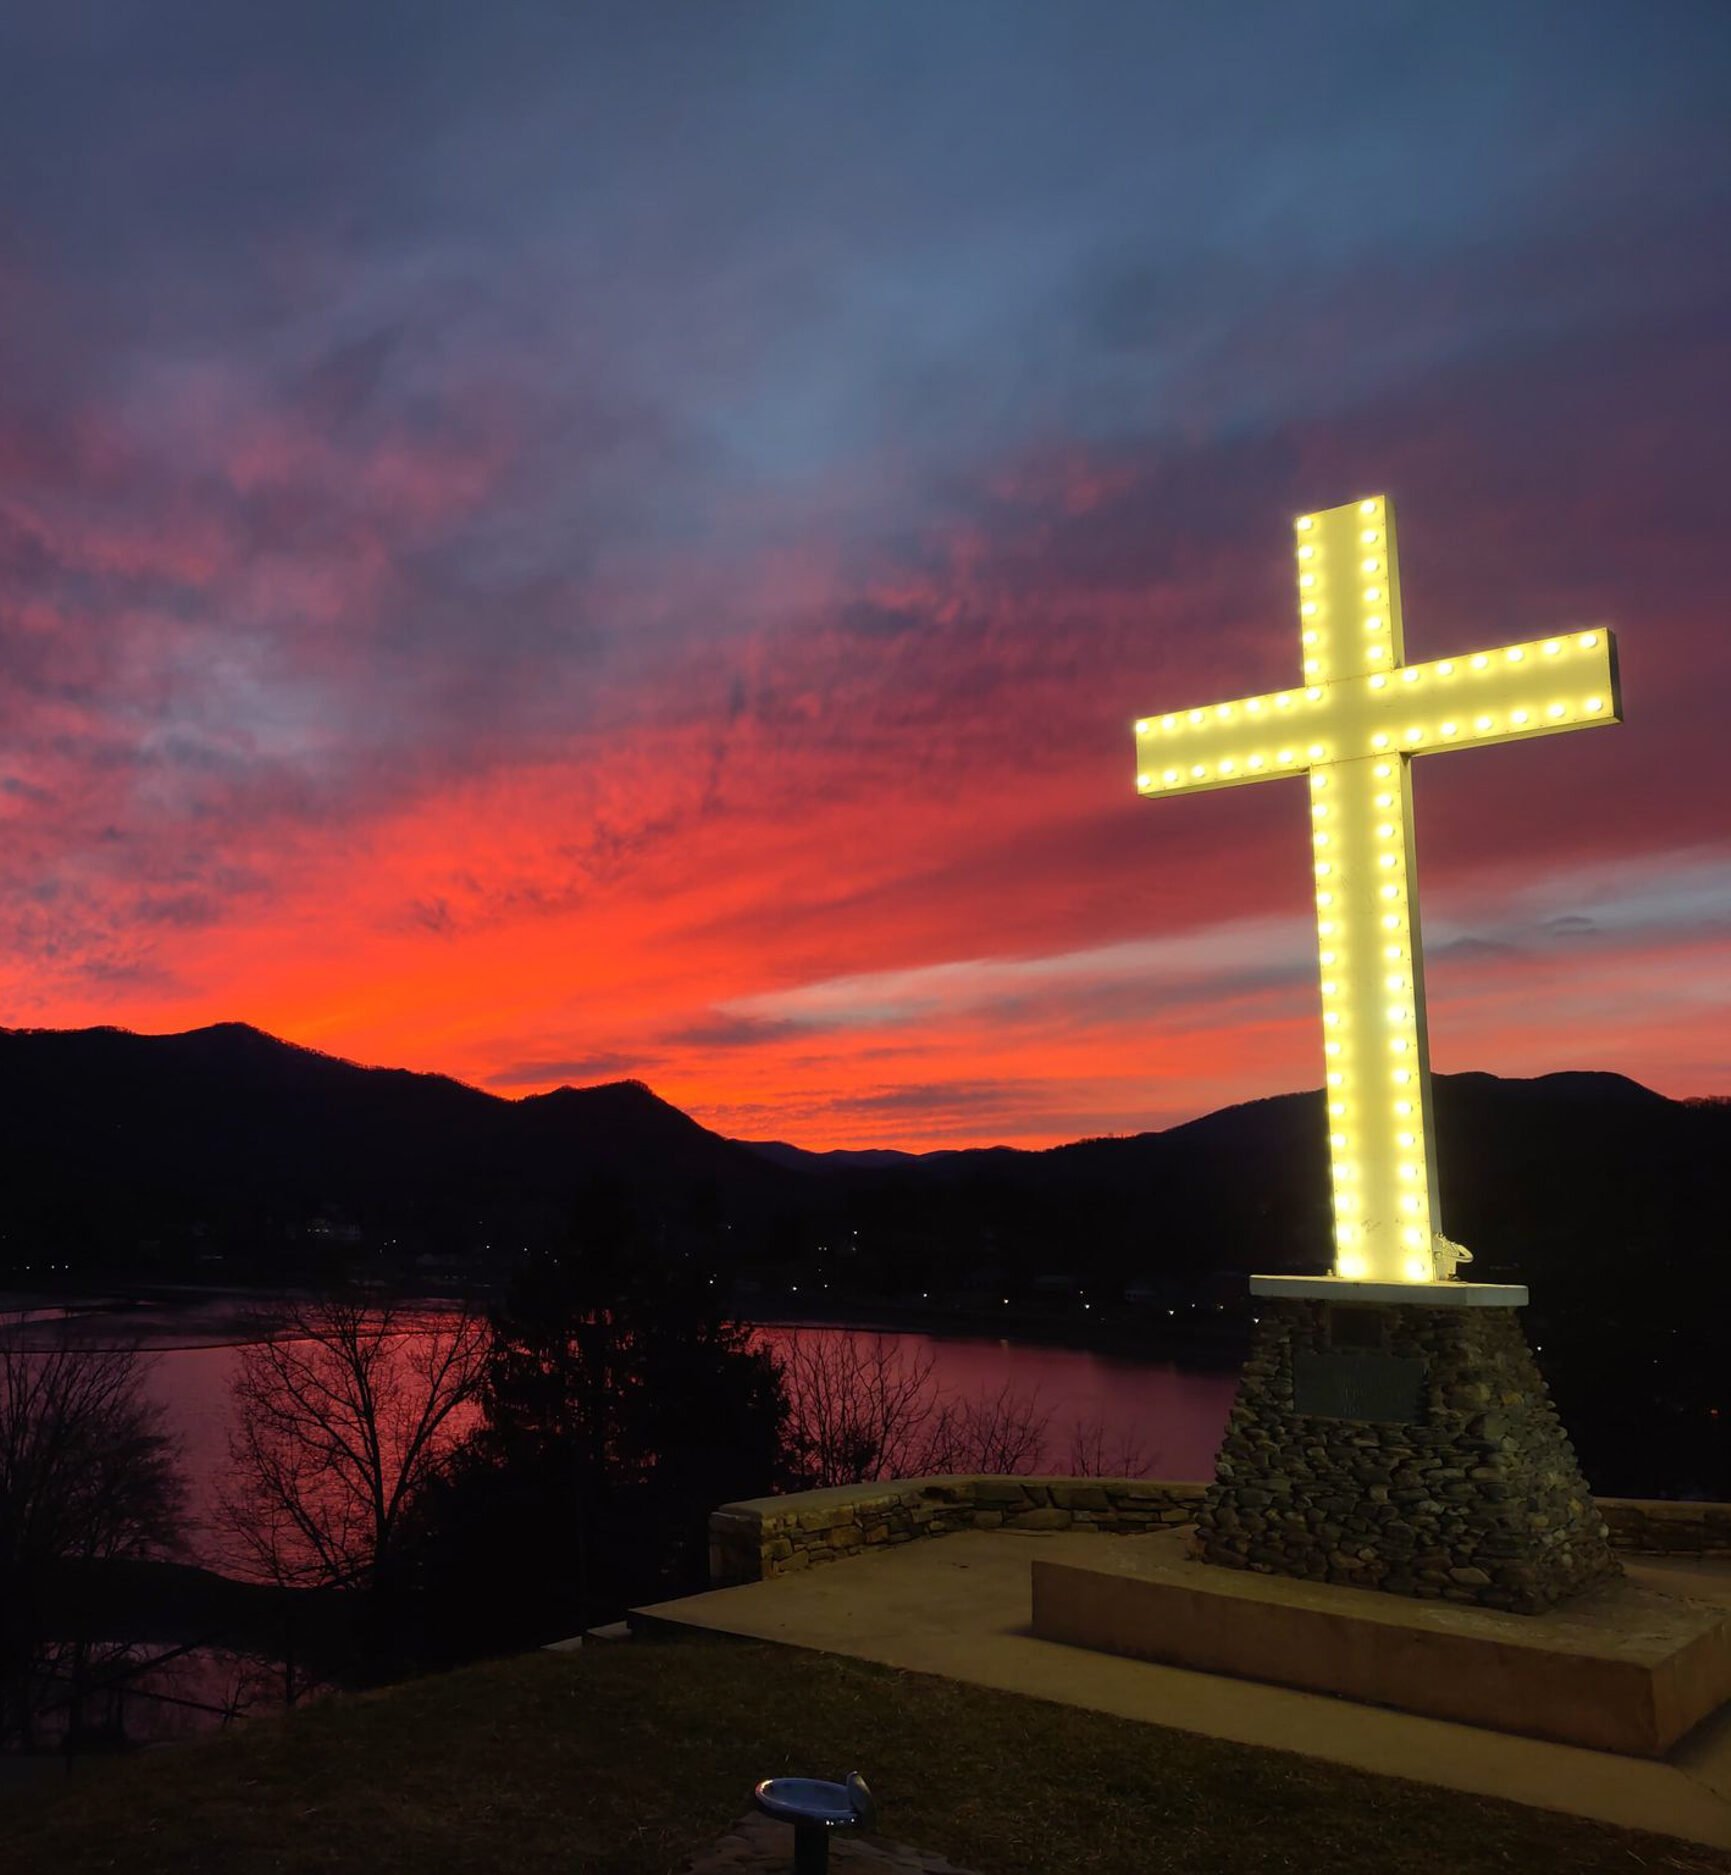 Winter Lake Junaluska sunset with cross in foreground